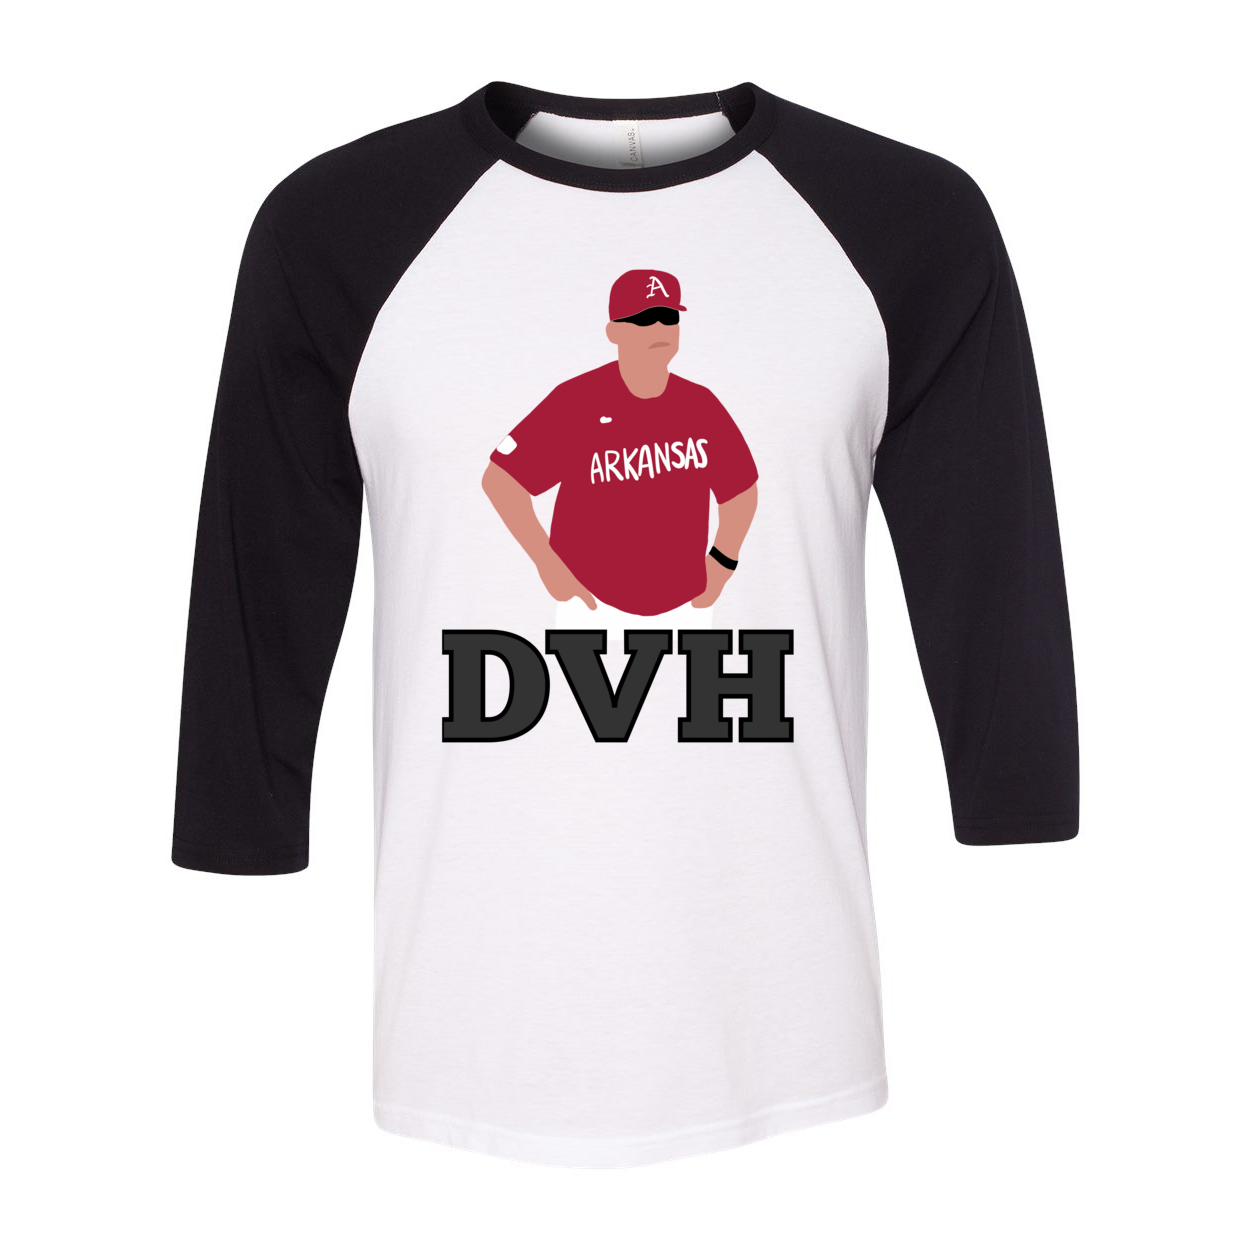 DVH (Van Horn) Baseball Tee